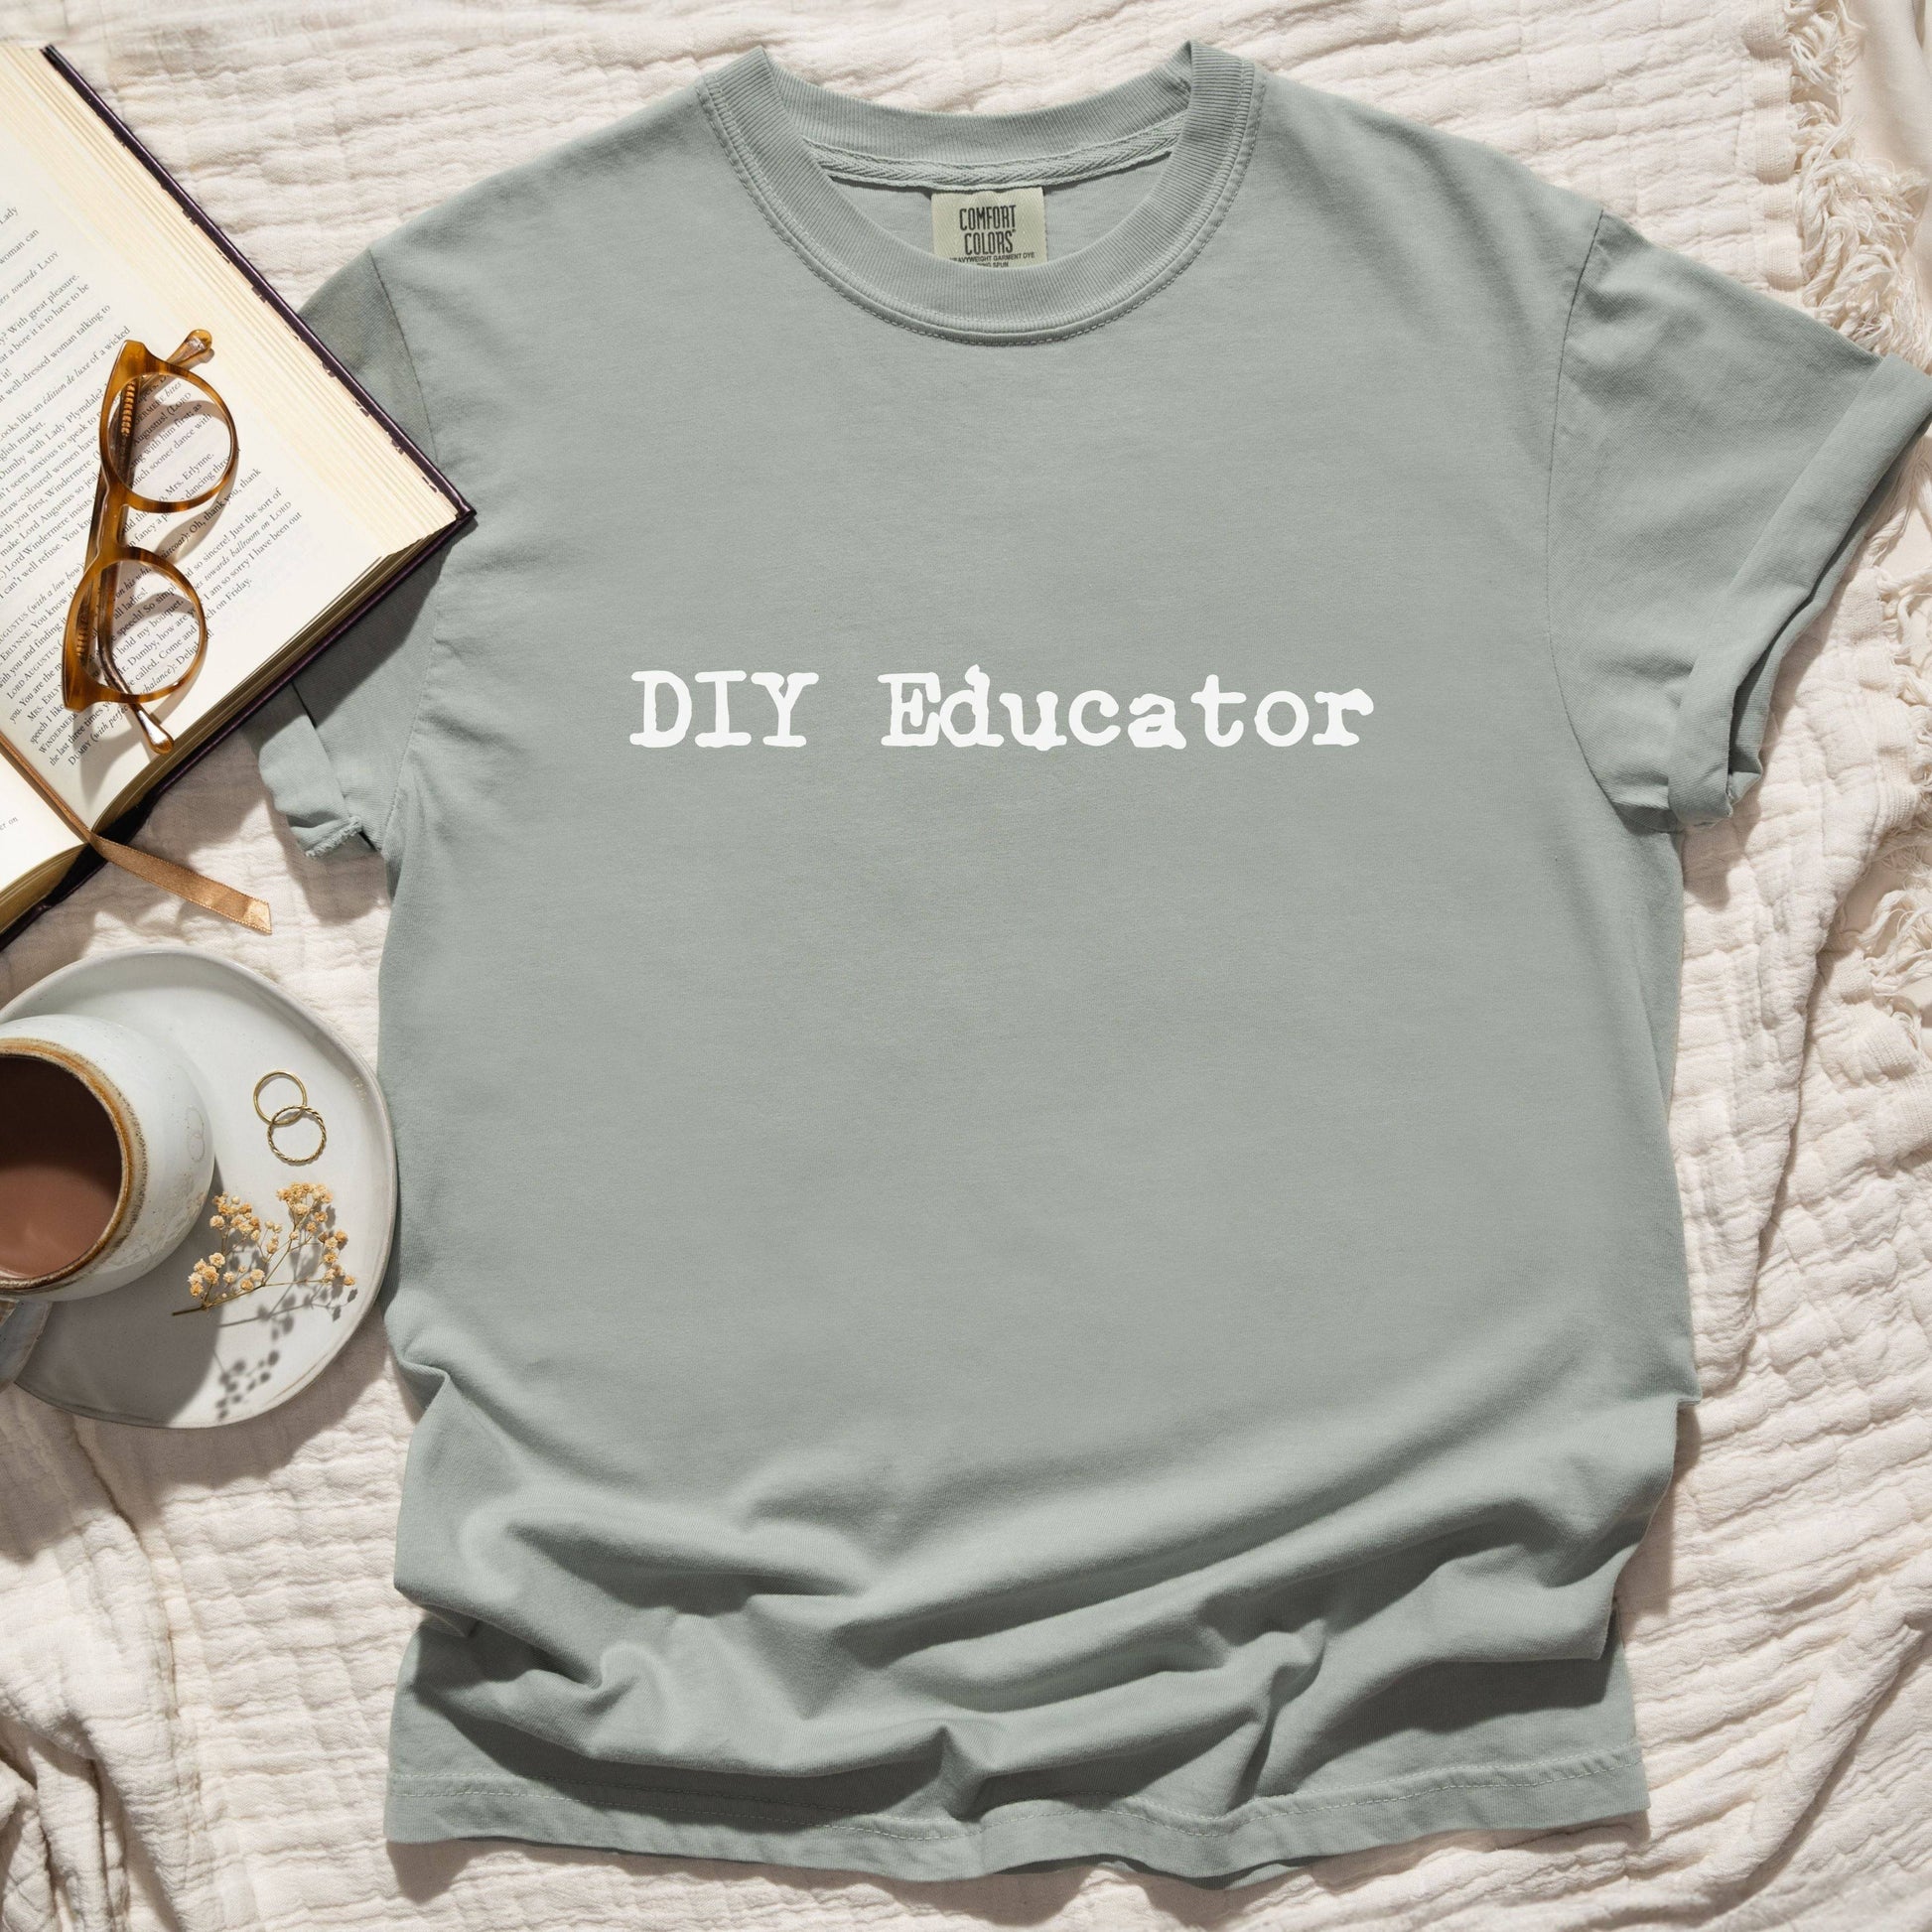 diy educator shirt for homeschool moms